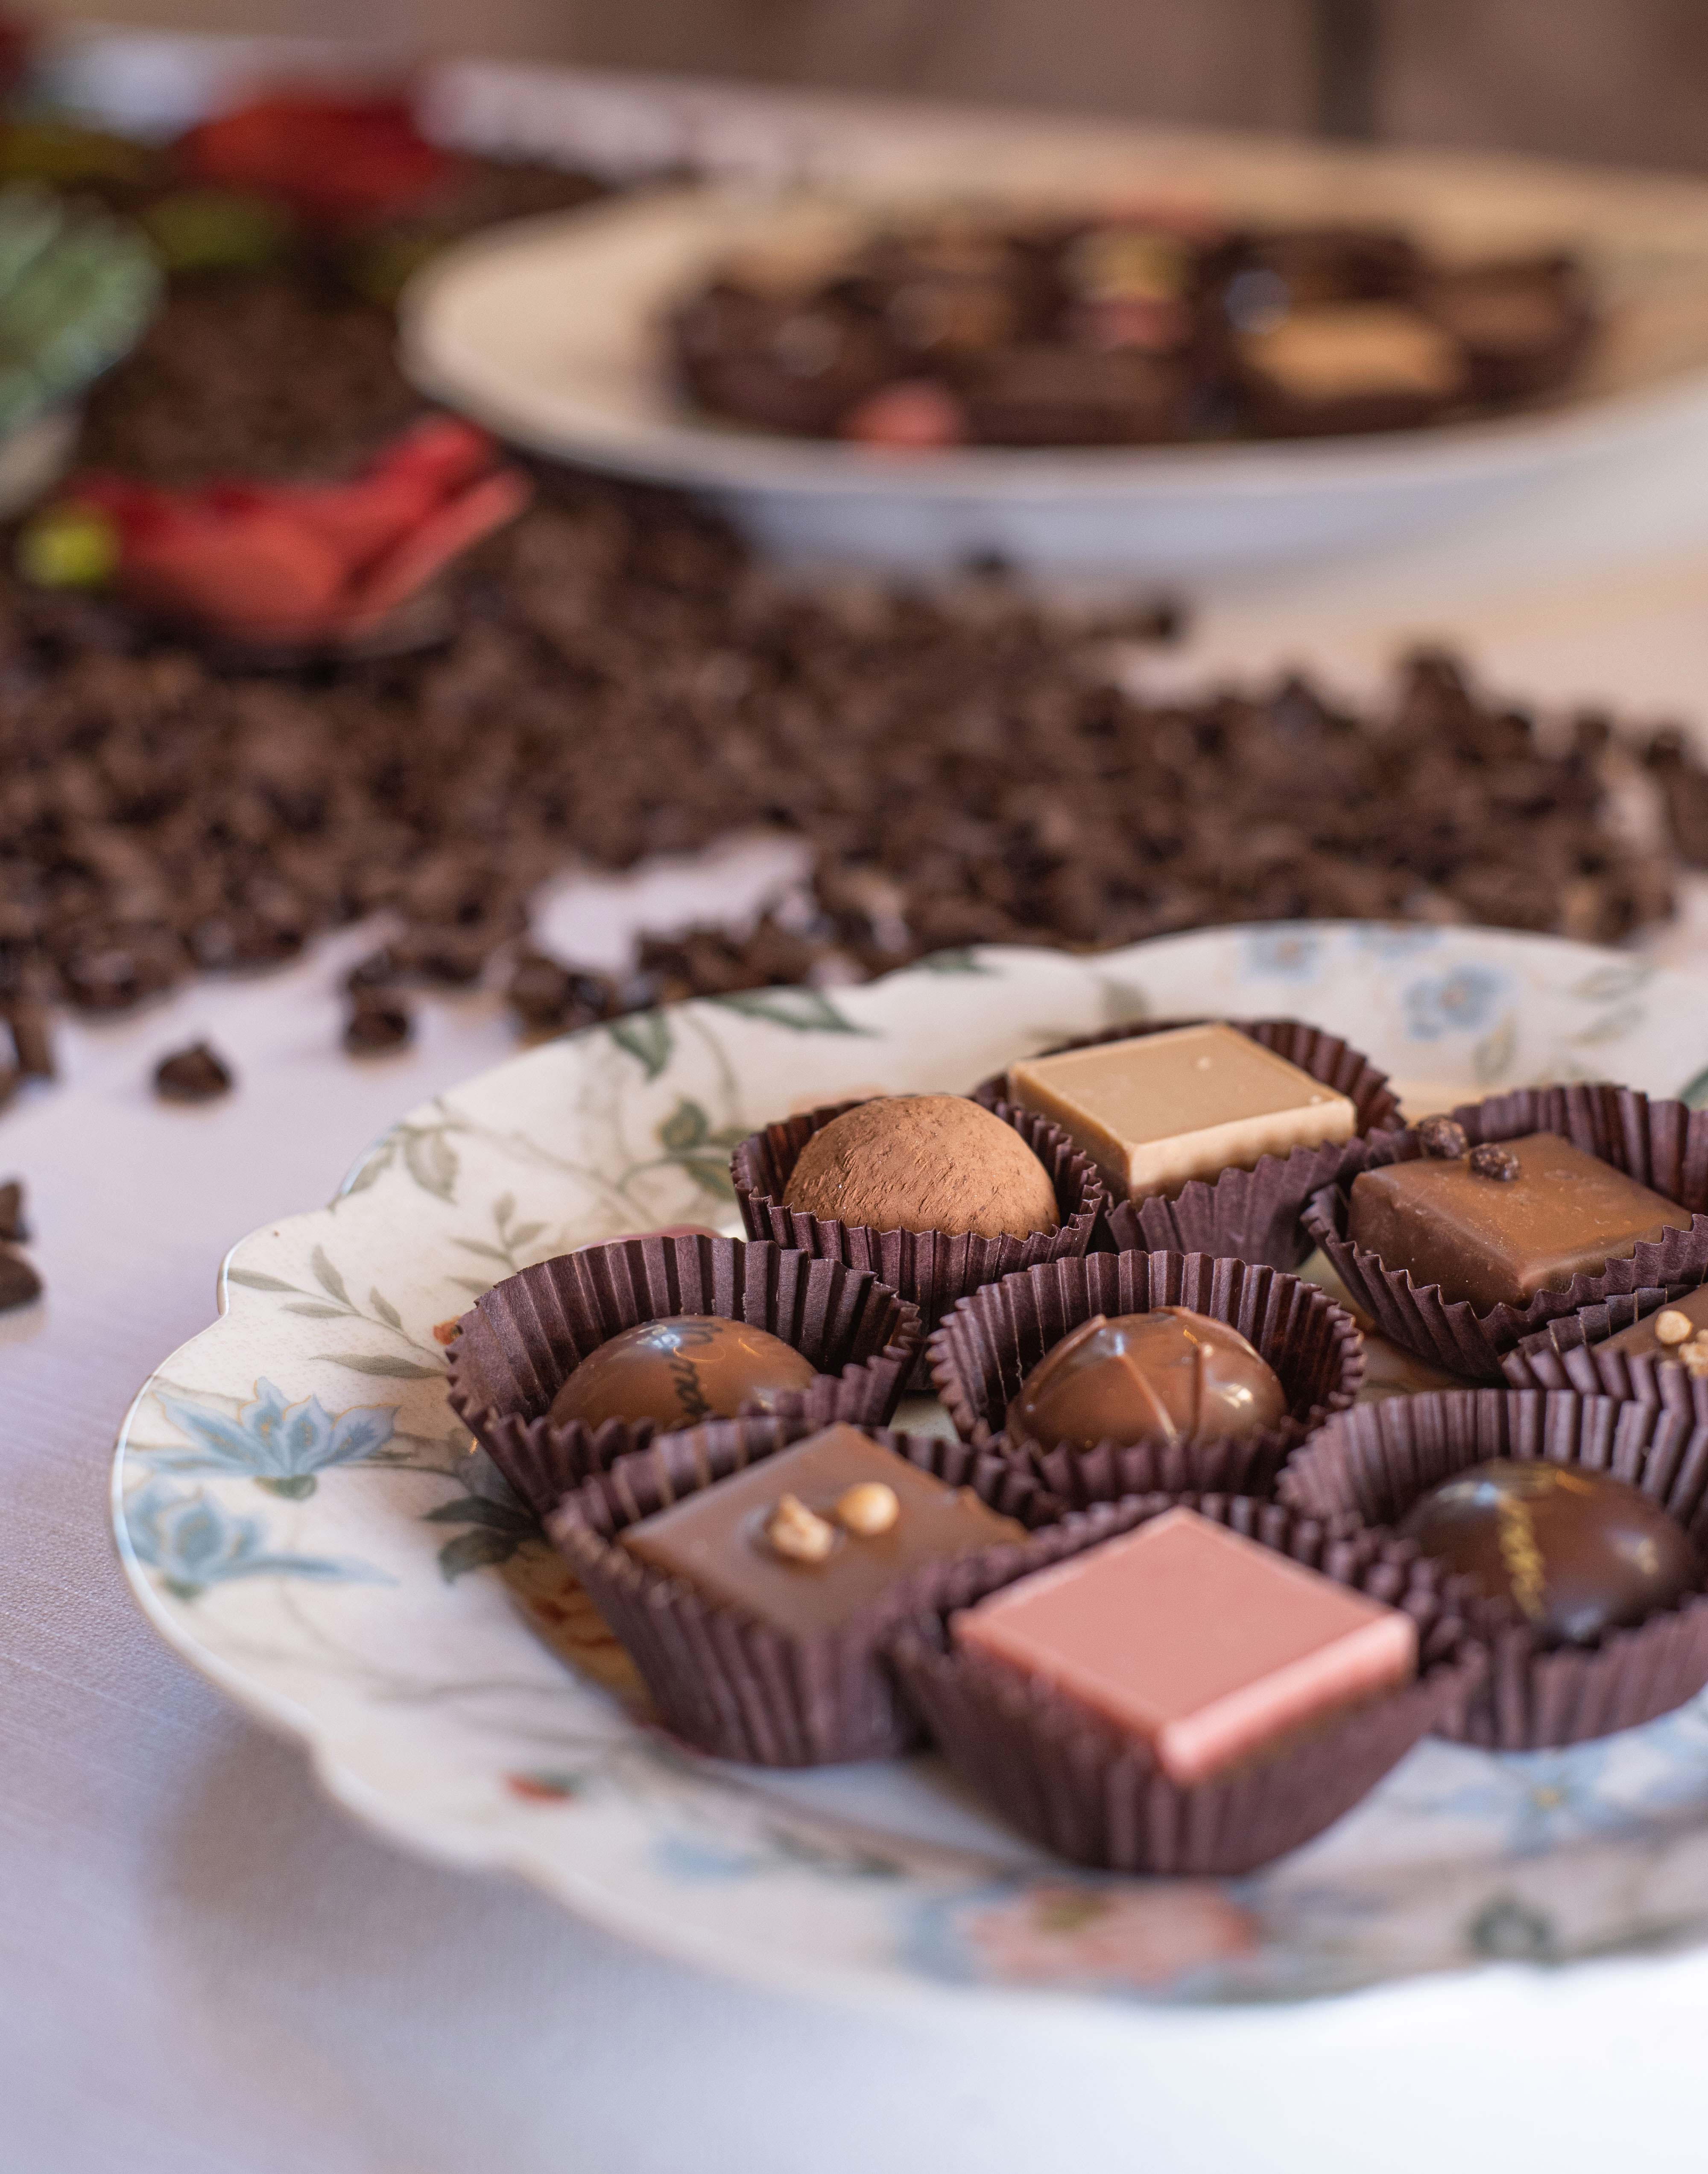 Chocolates at ChocoLove